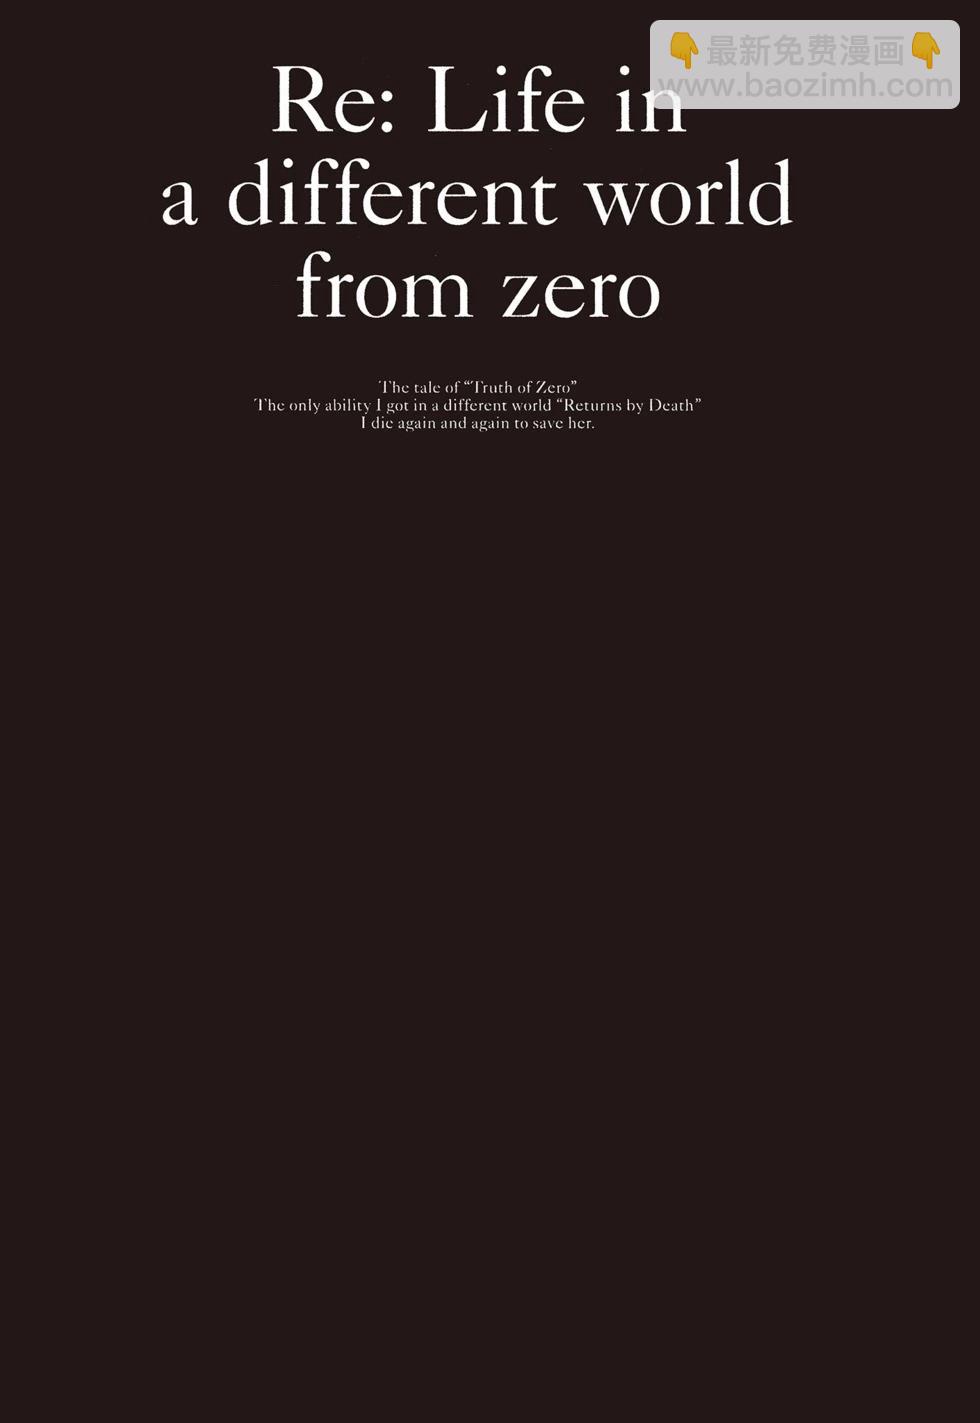 Re:從零開始的異世界生活 第三章 Truth of Zero - 第09卷(2/4) - 7